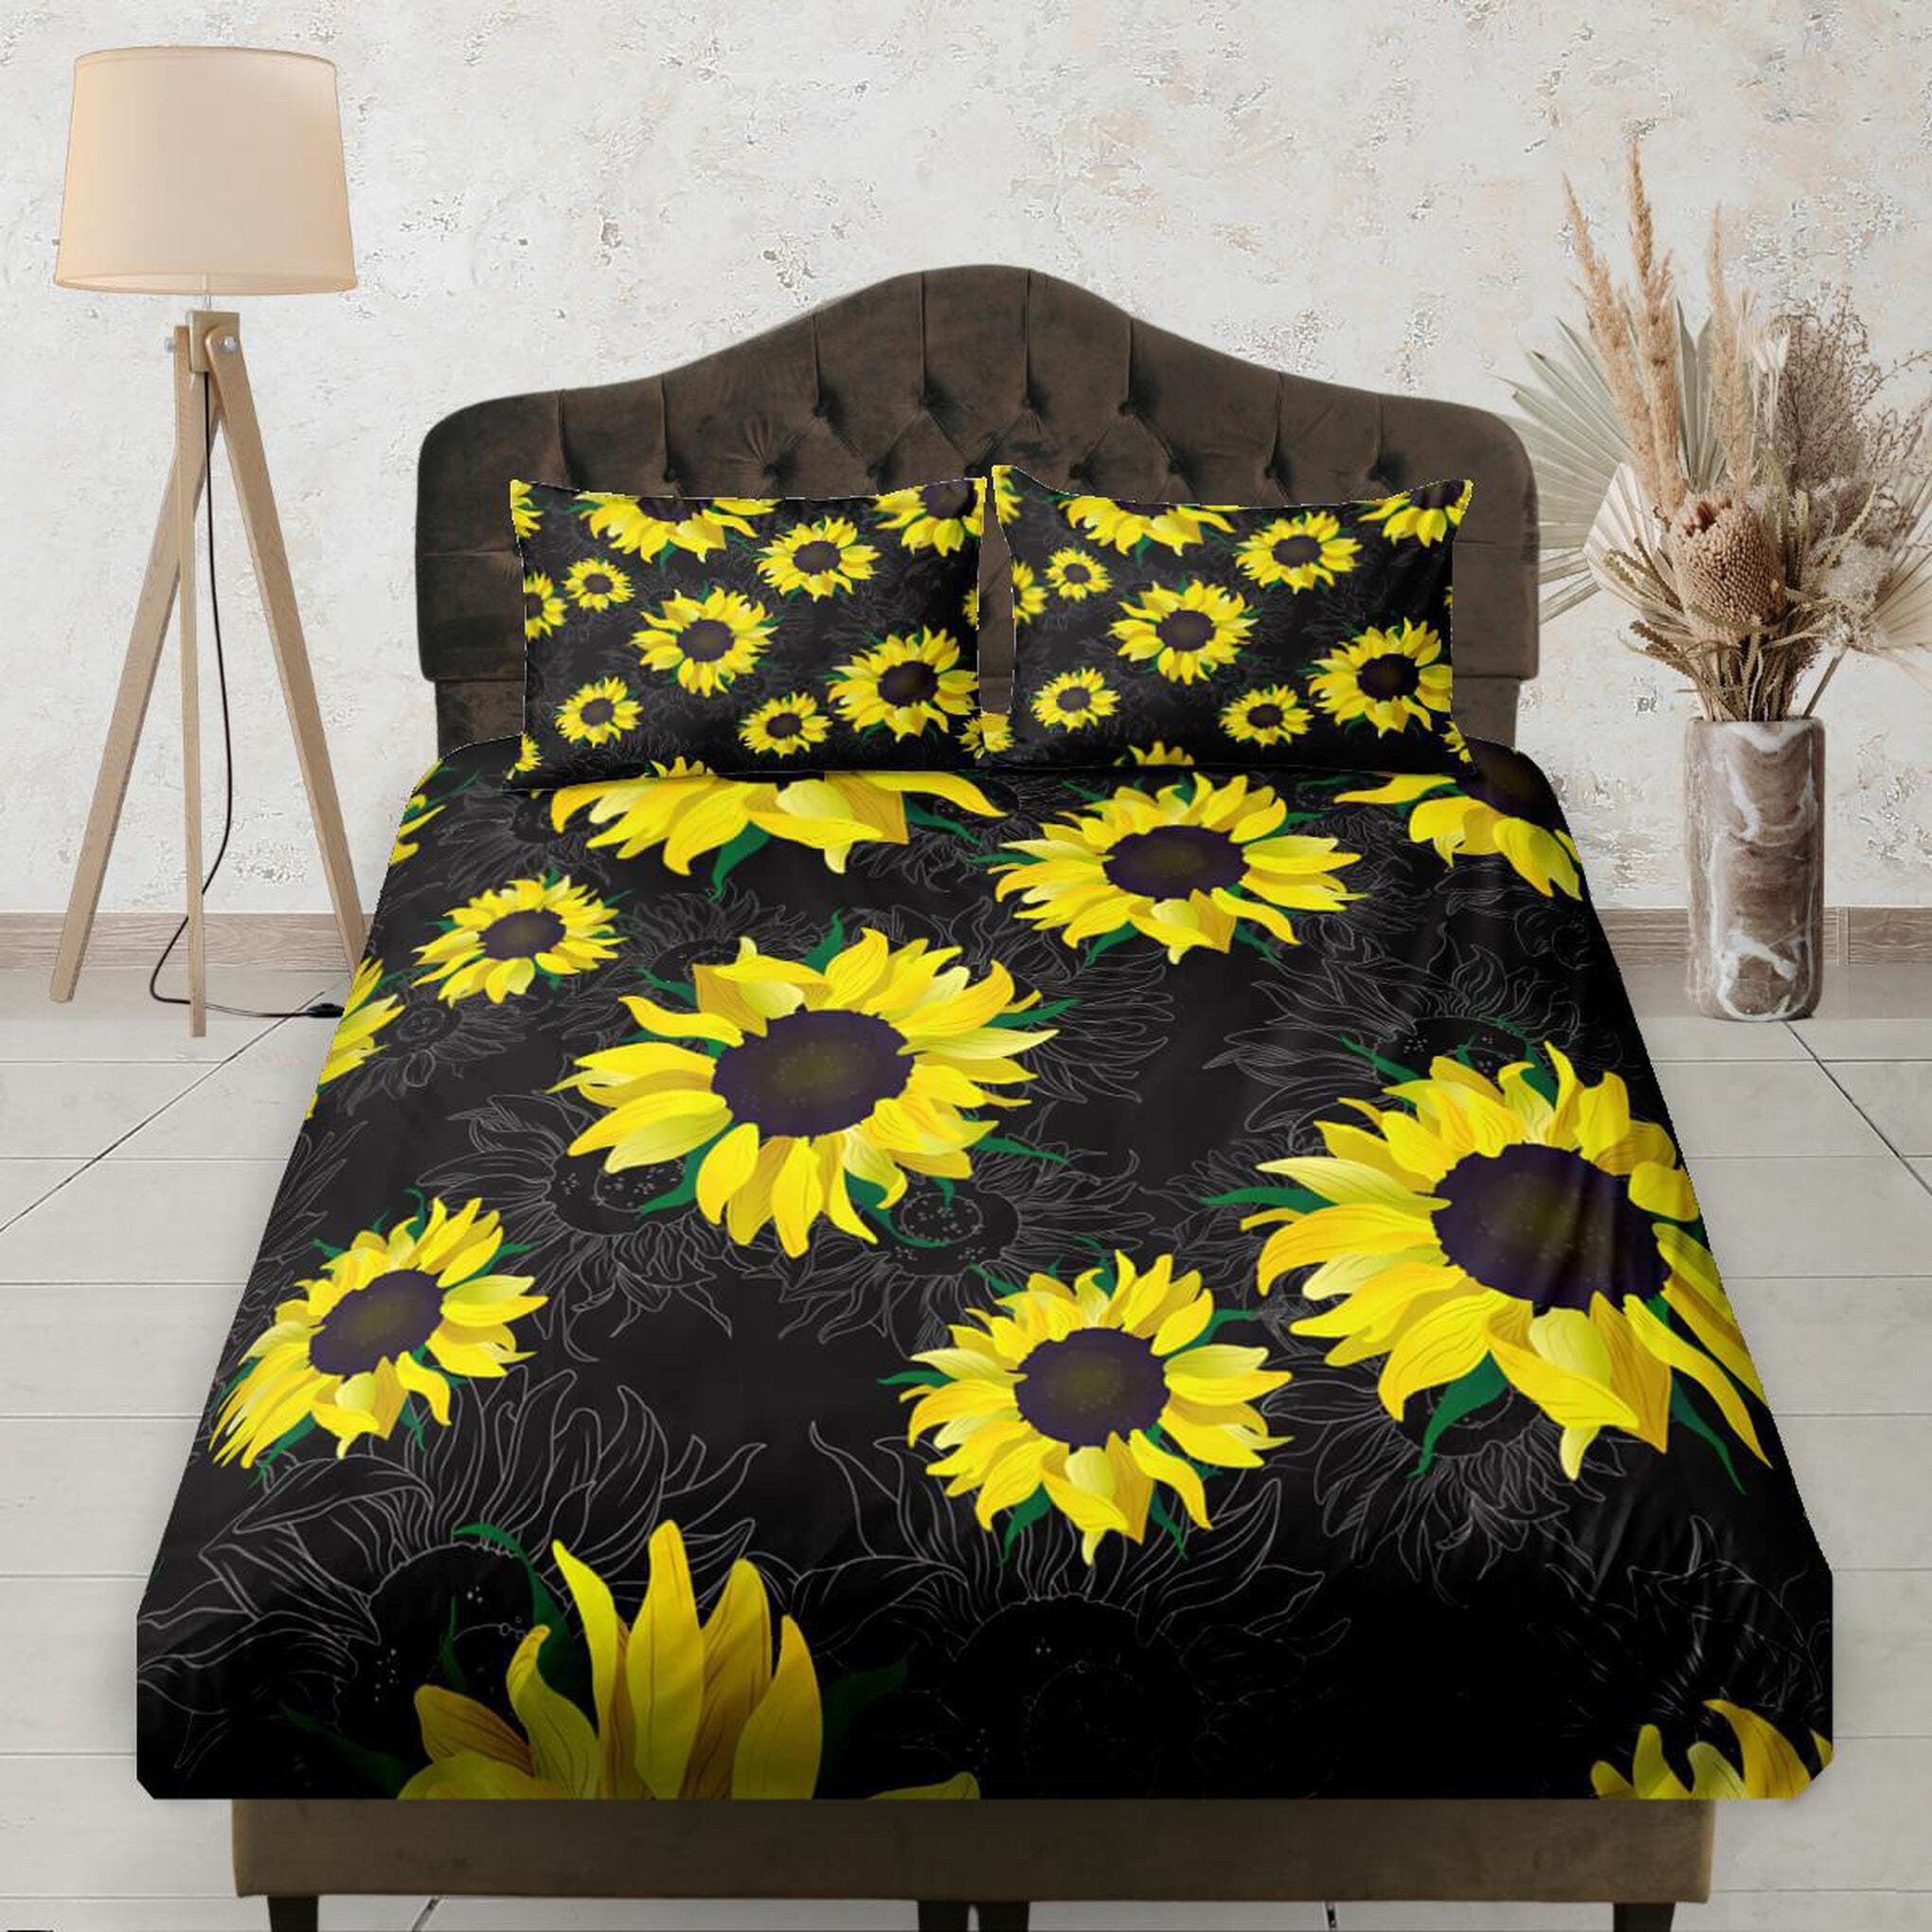 daintyduvet Sunflower Black Bedding, Fitted Sheet Deep Pocket, Floral Prints, Aesthetic Boho Bedding Set, Dorm Bedding, Crib Sheet, King, Queen, Double